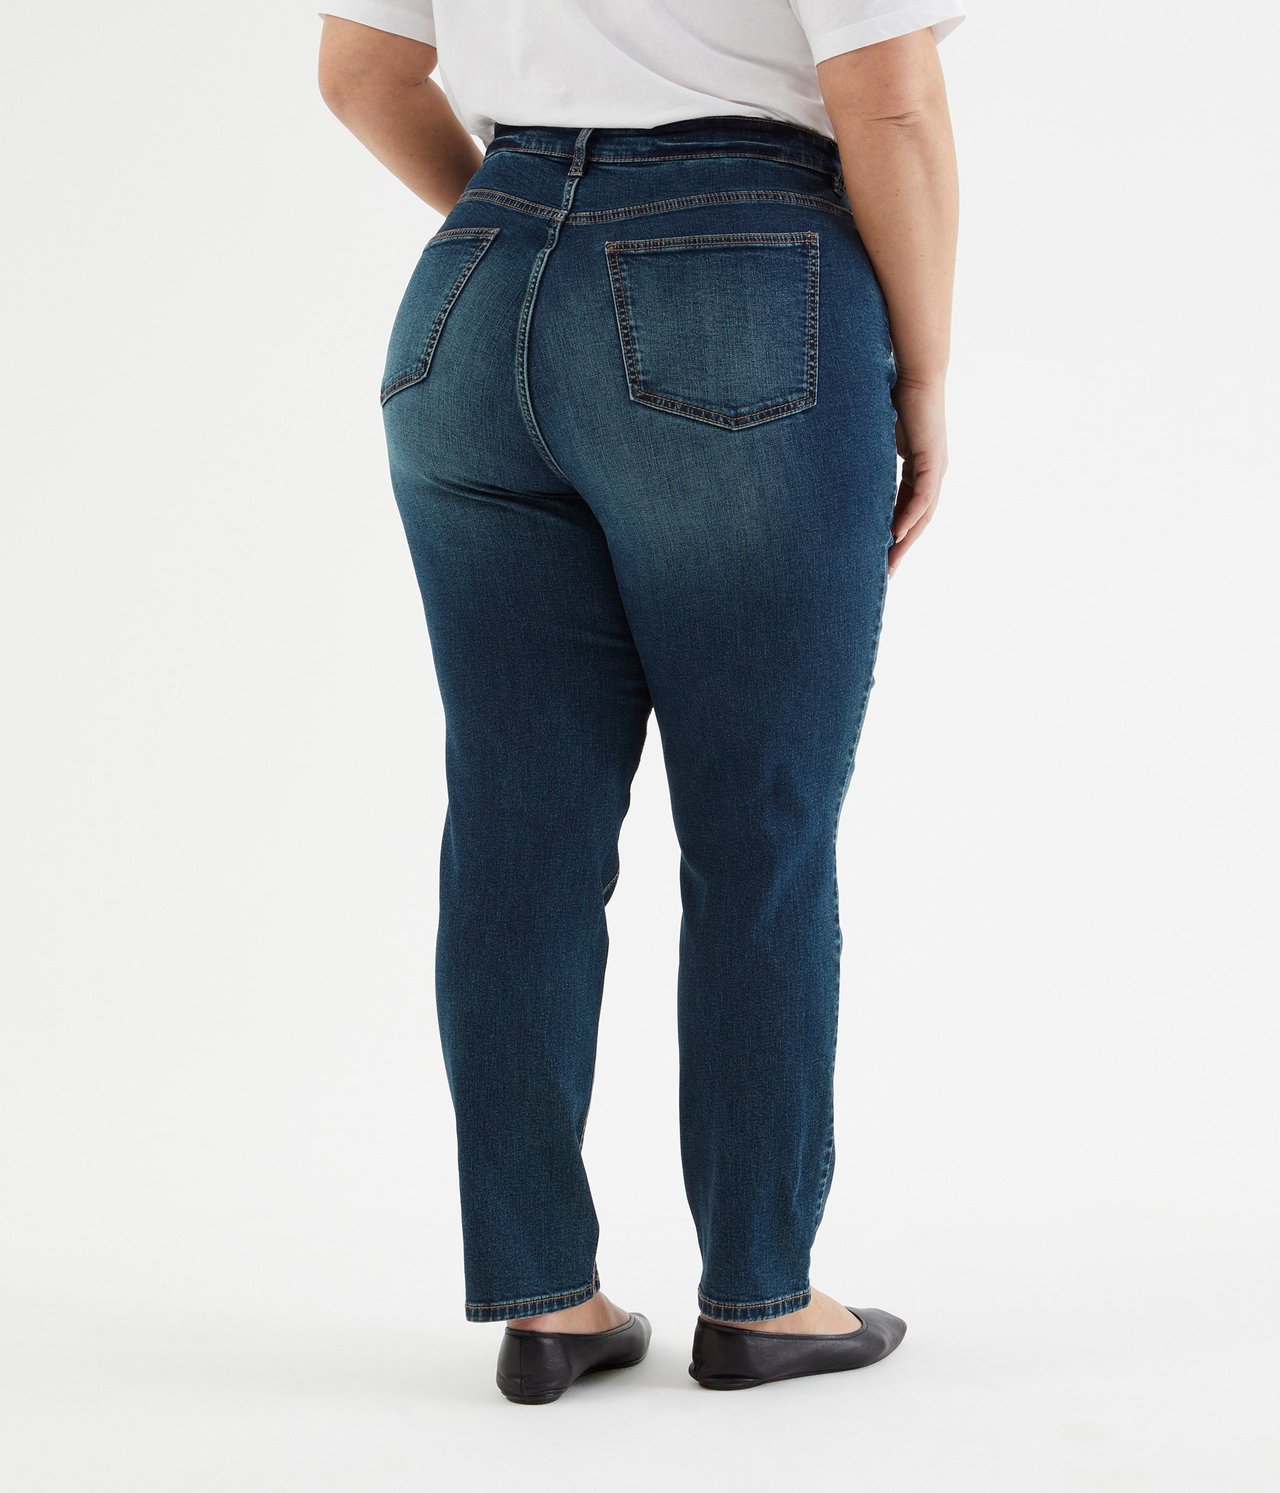 Jenny jeans straight slim fit Denimi - 44 - 2